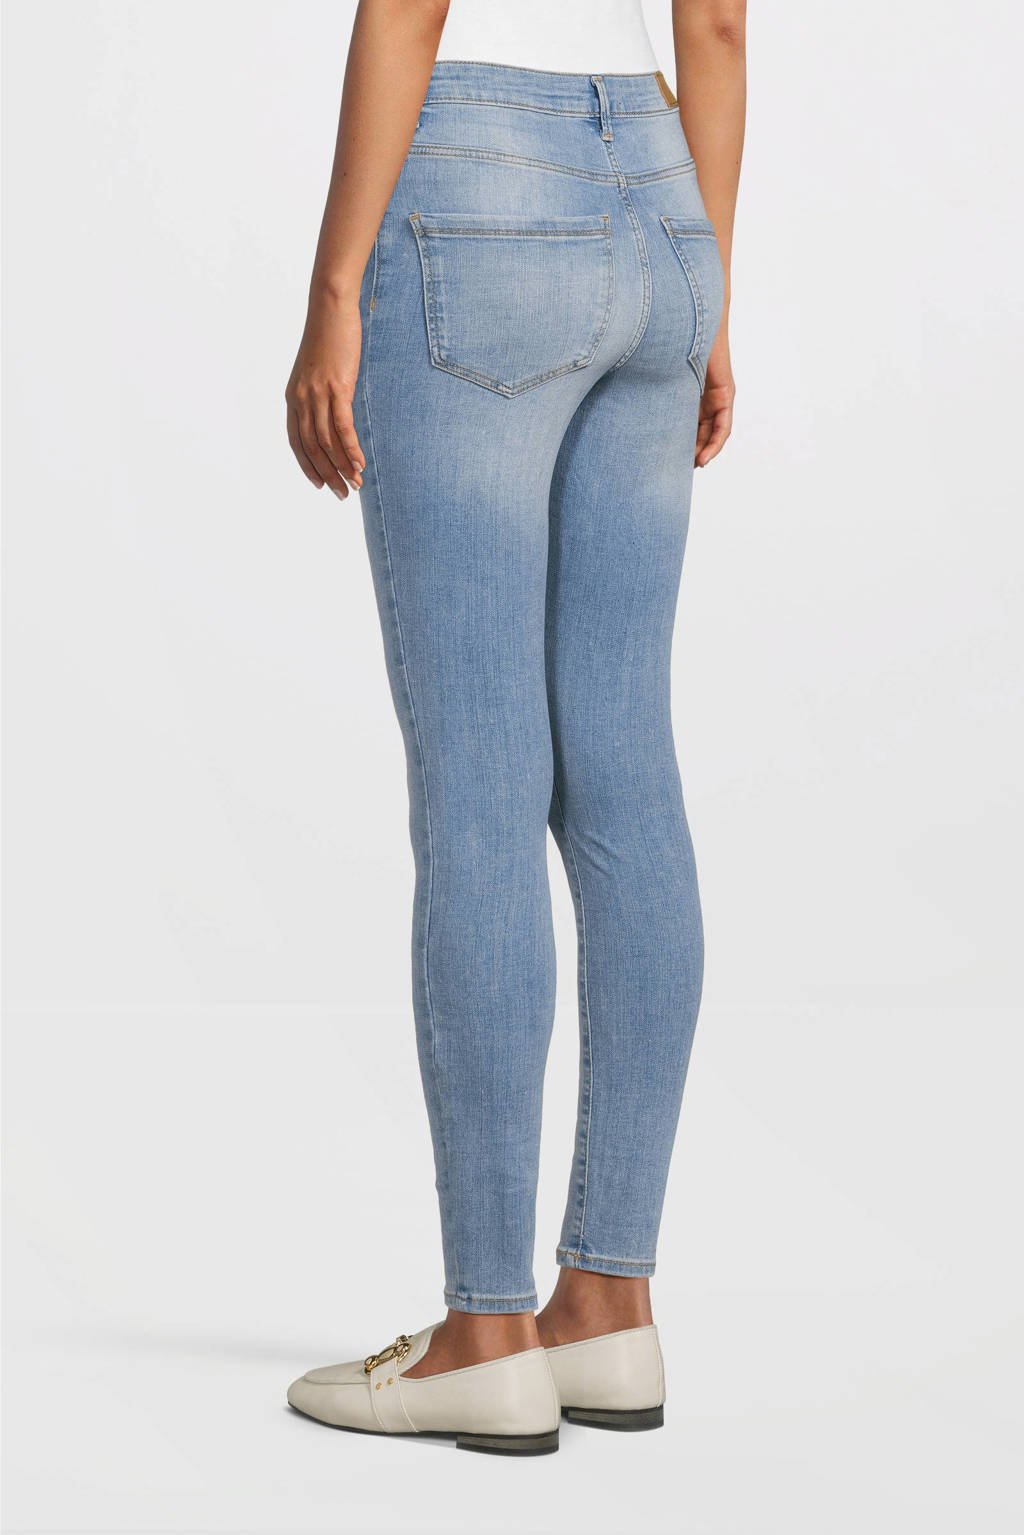 high MODA jeans | VMSOPHIA wehkamp VERO waist blue skinny denim light